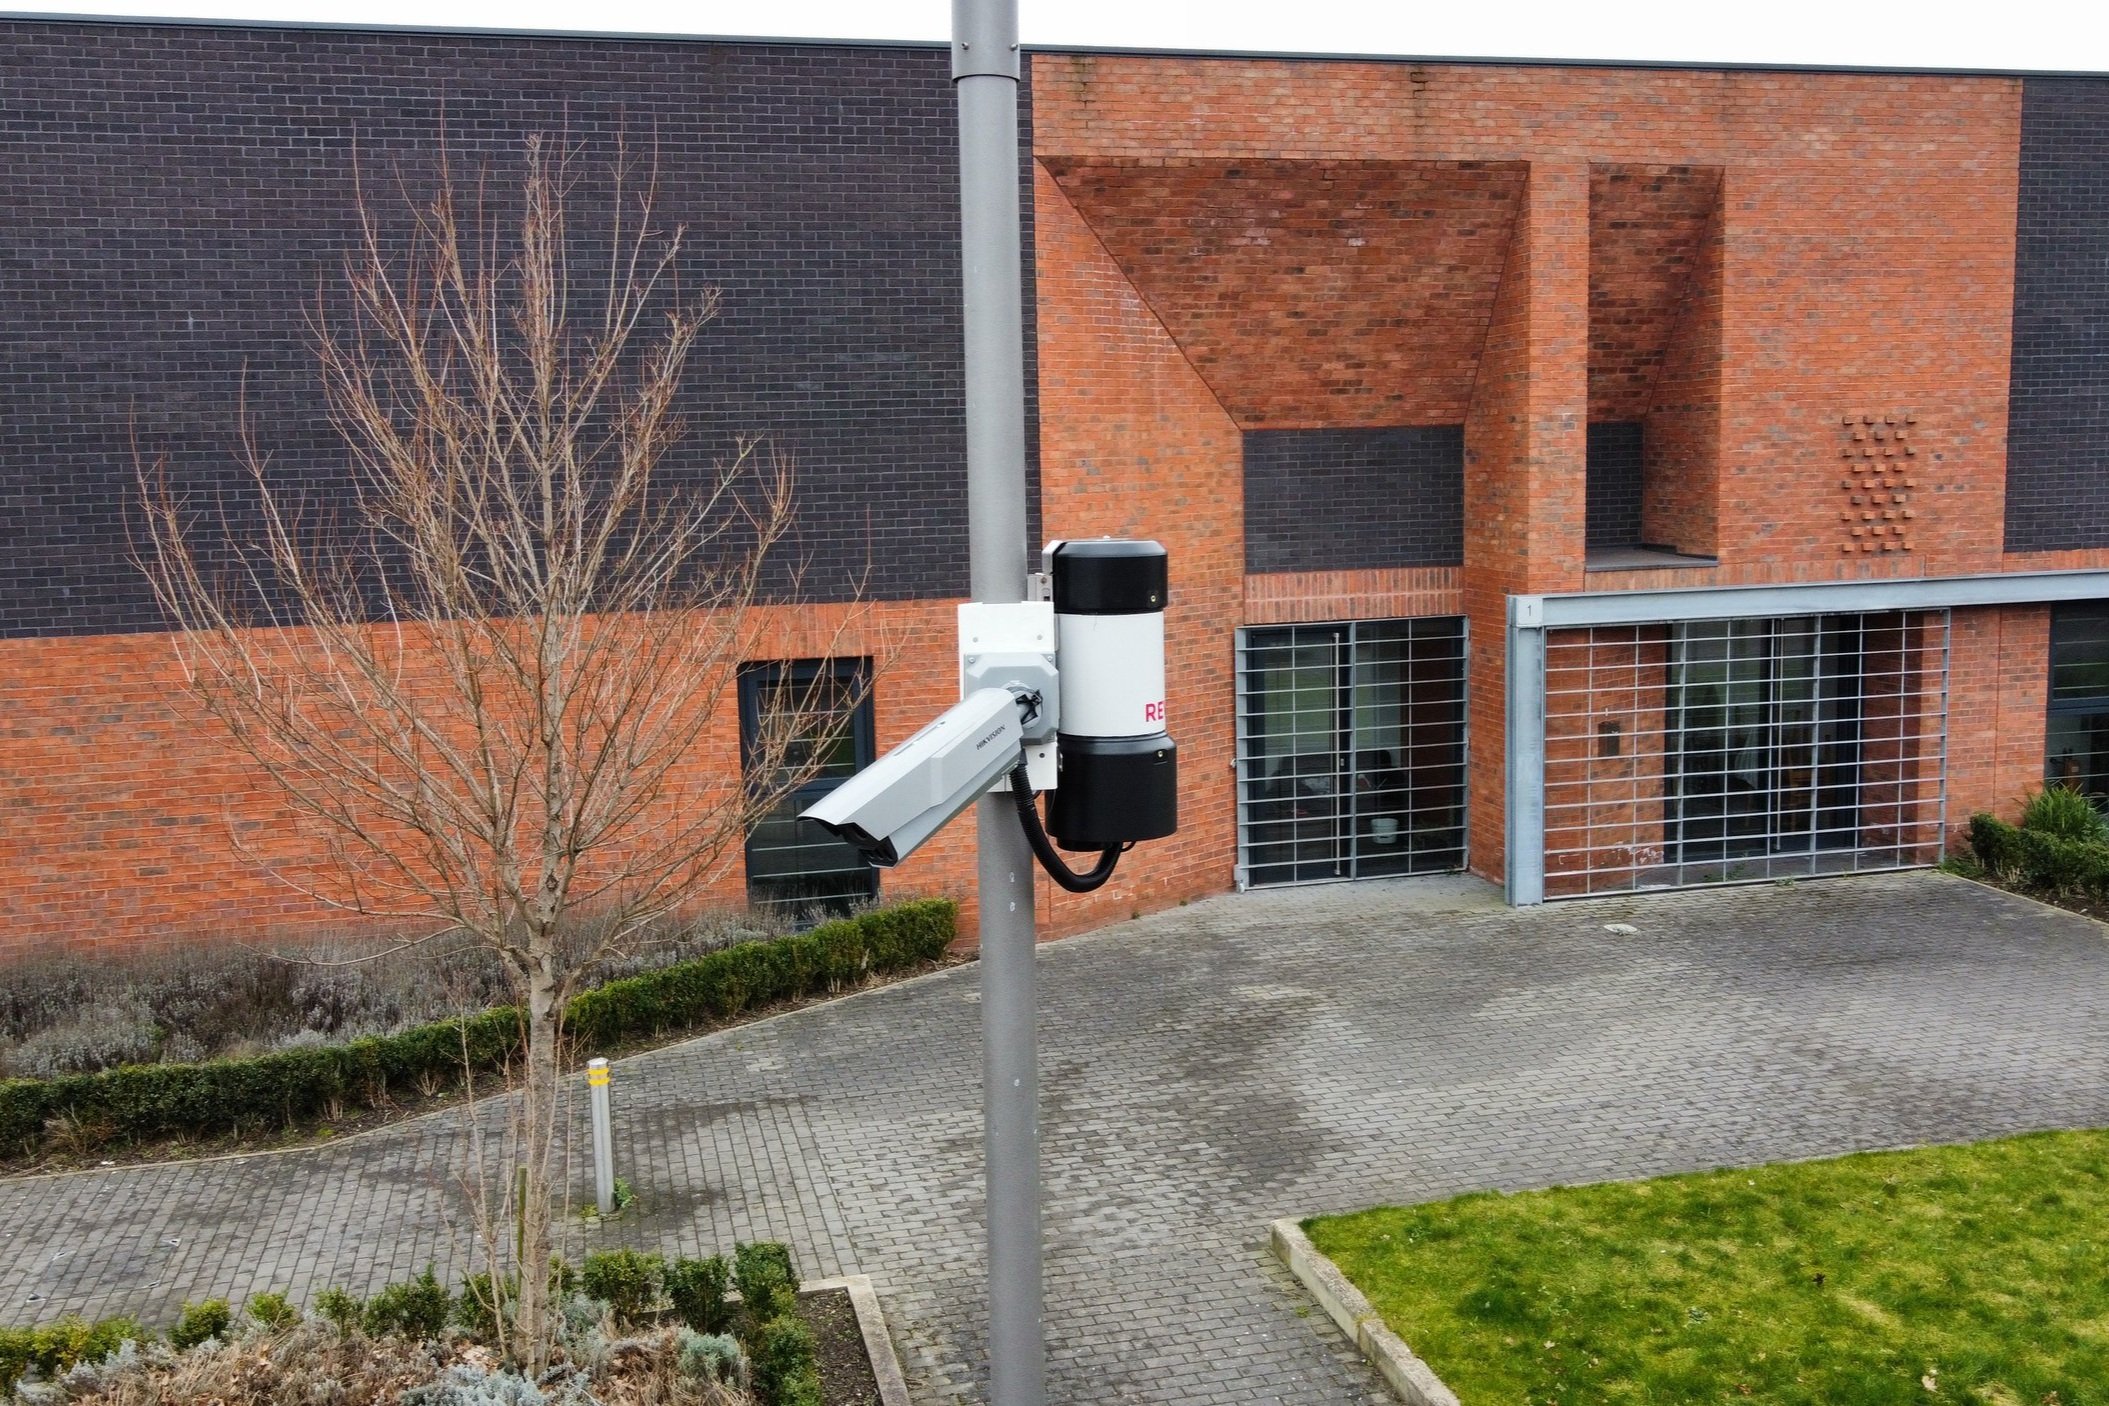 Mobile CCTV facilitates ANPR capability